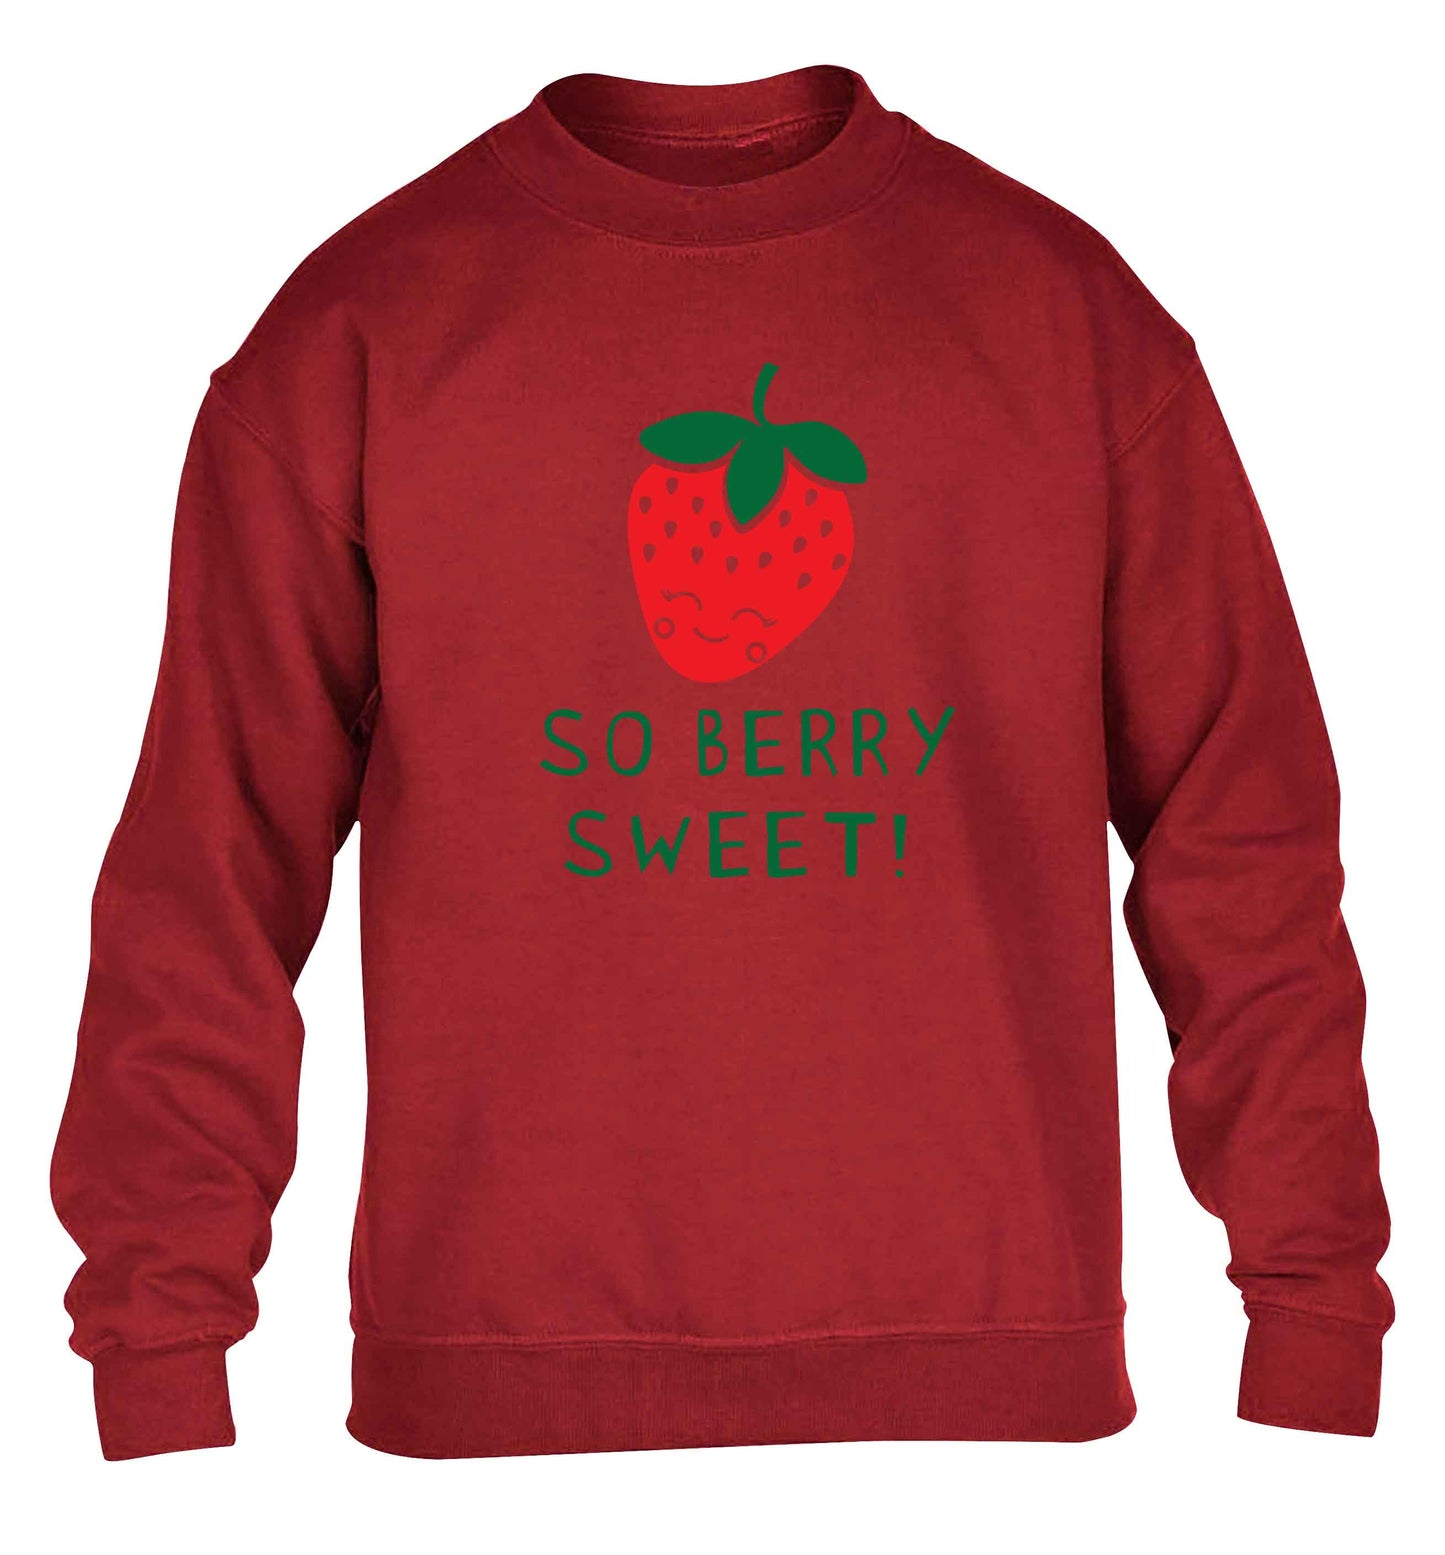 So berry sweet children's grey sweater 12-13 Years